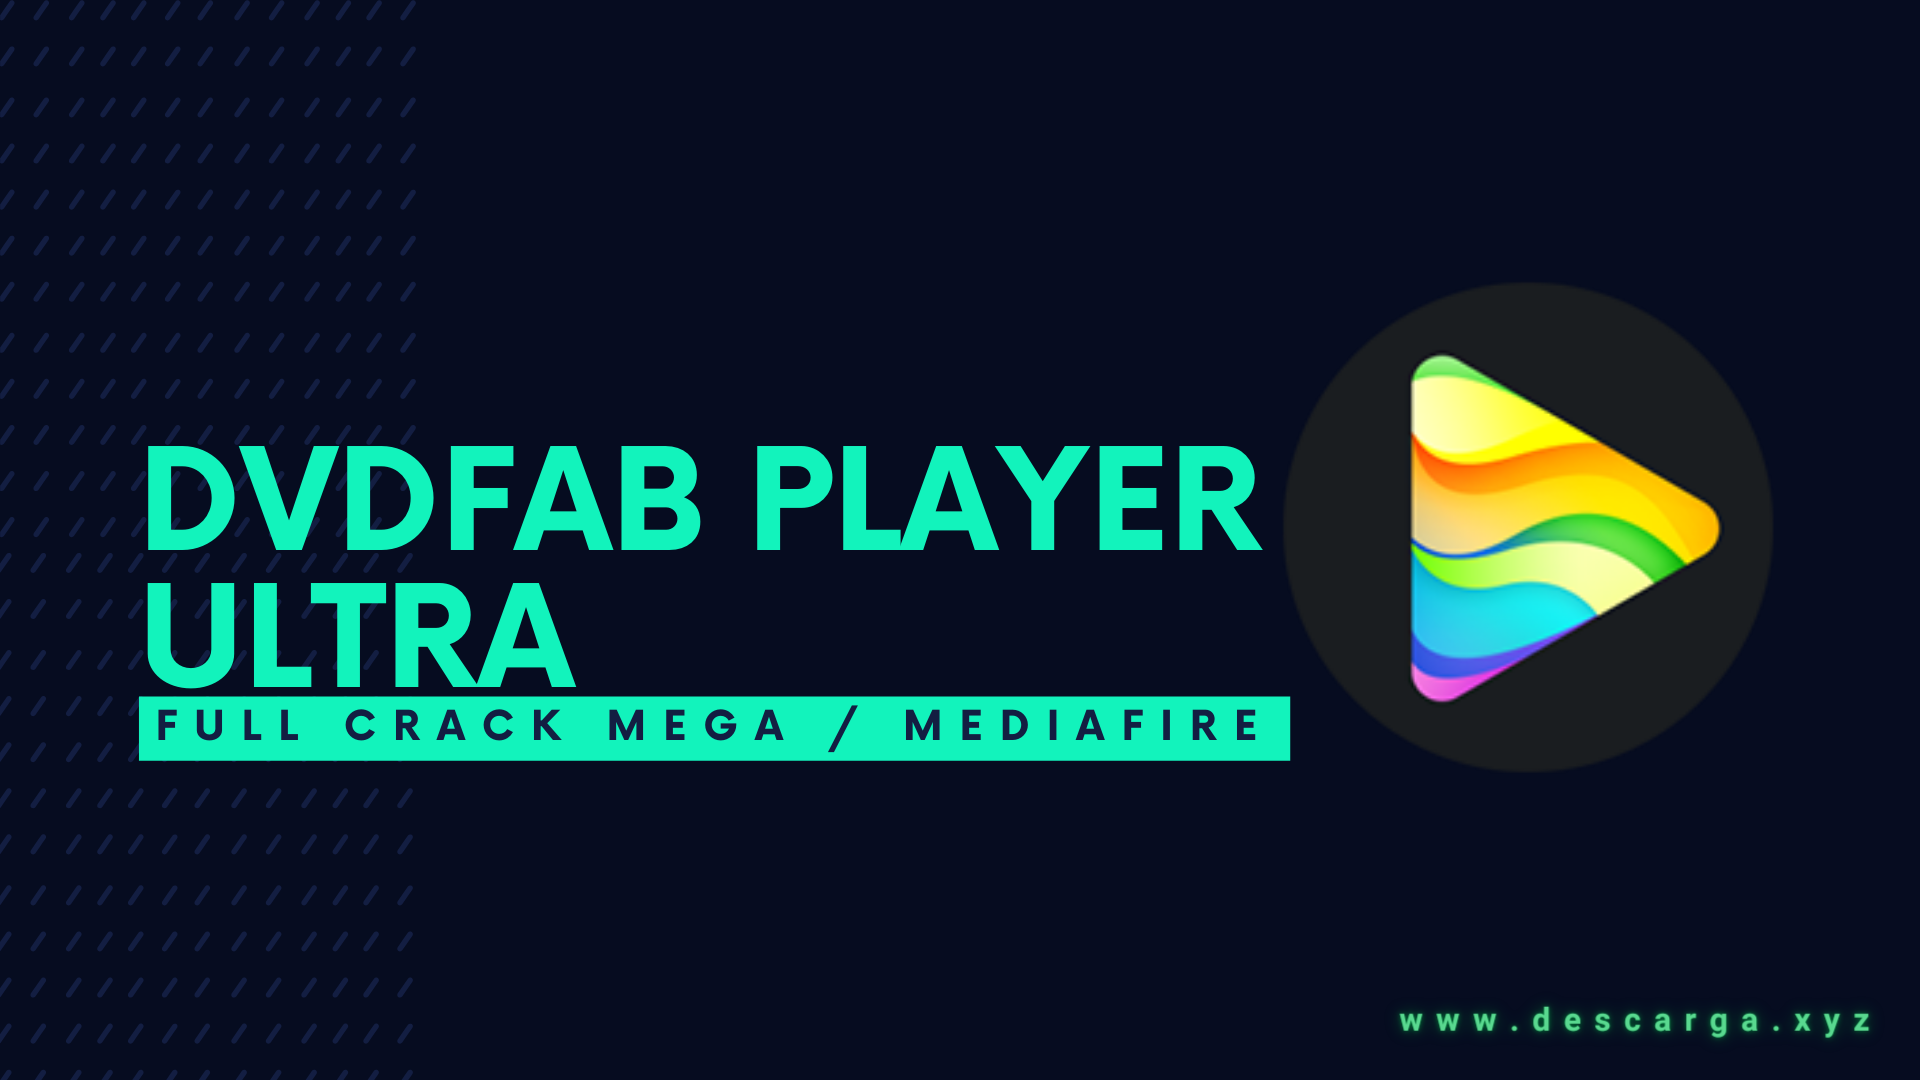 DVDFab Player Ultra Full Crack Descargar Gratis por Mega